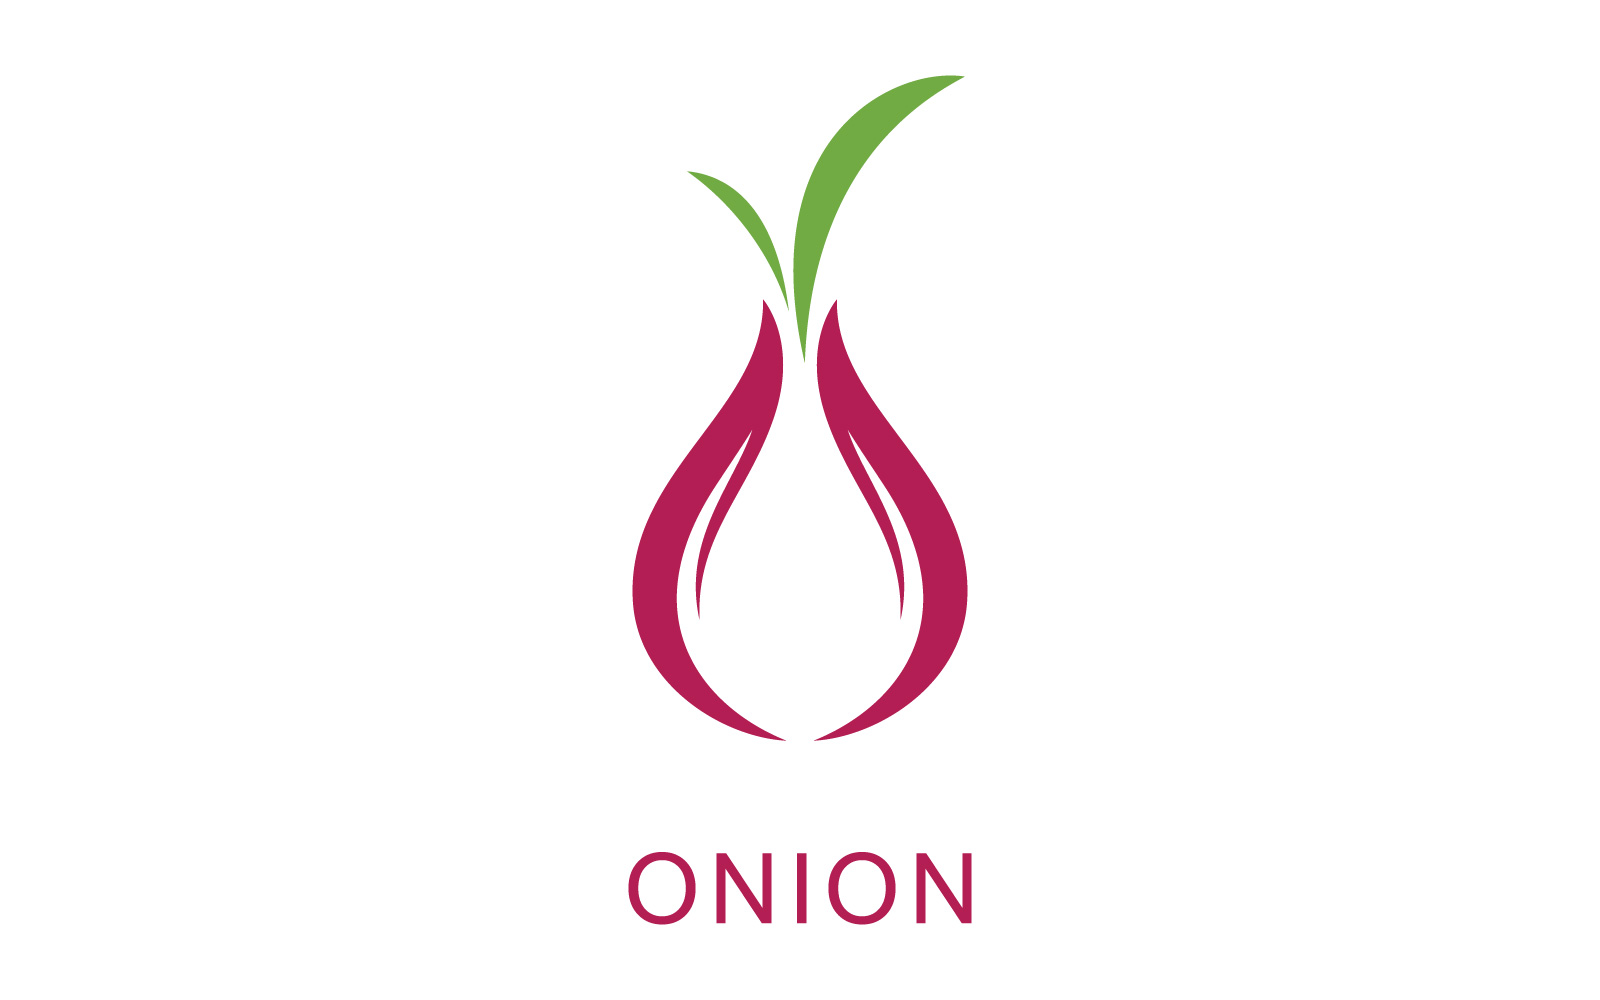 Onion Vector Template. Red Onion Logo Design V4